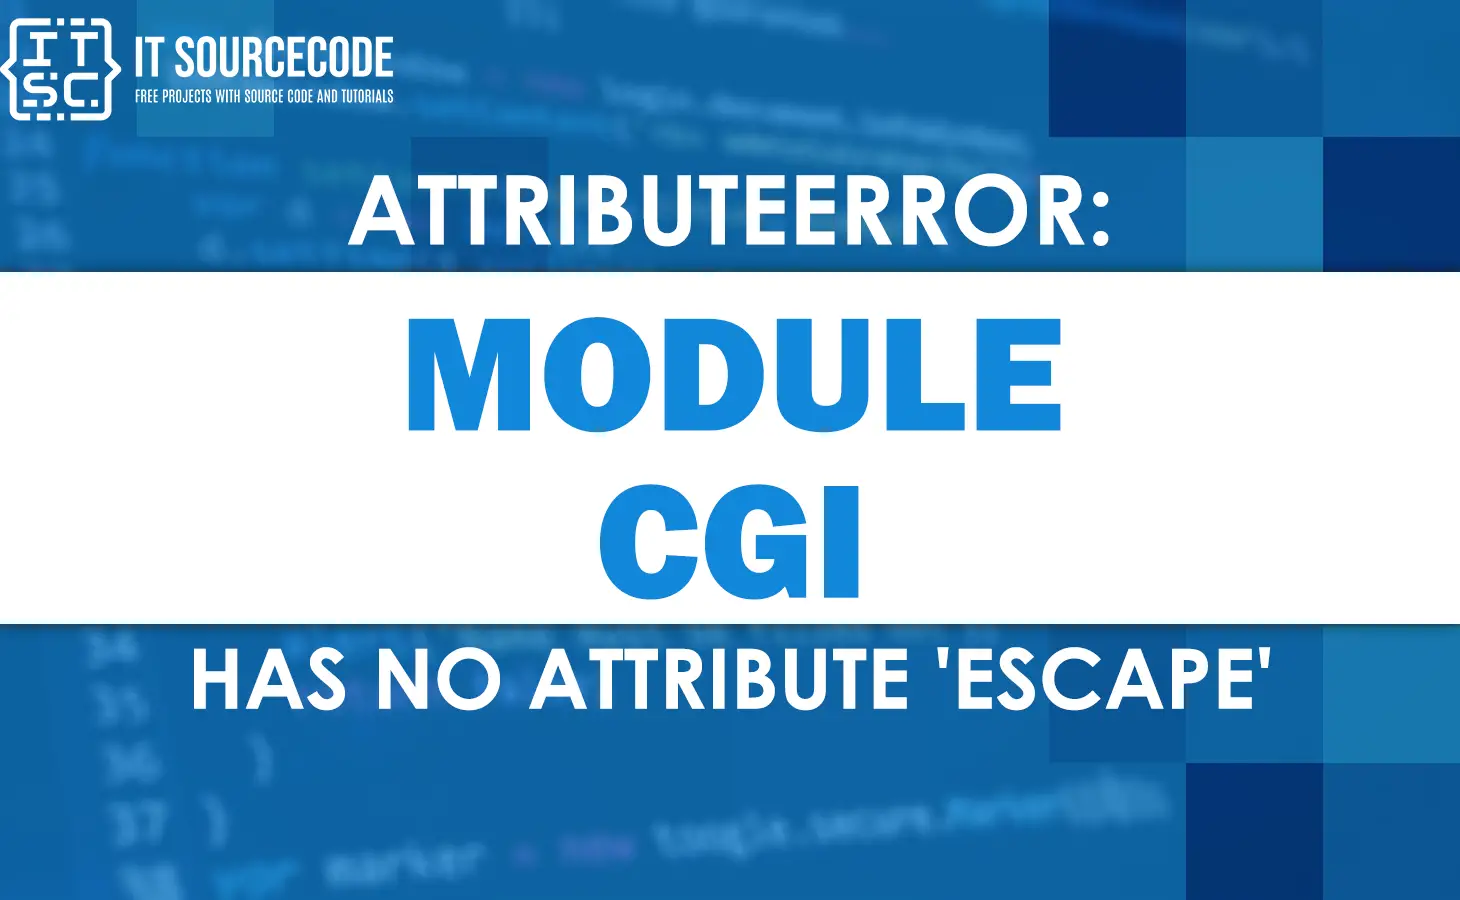 Attributeerror: module 'cgi' has no attribute 'escape'